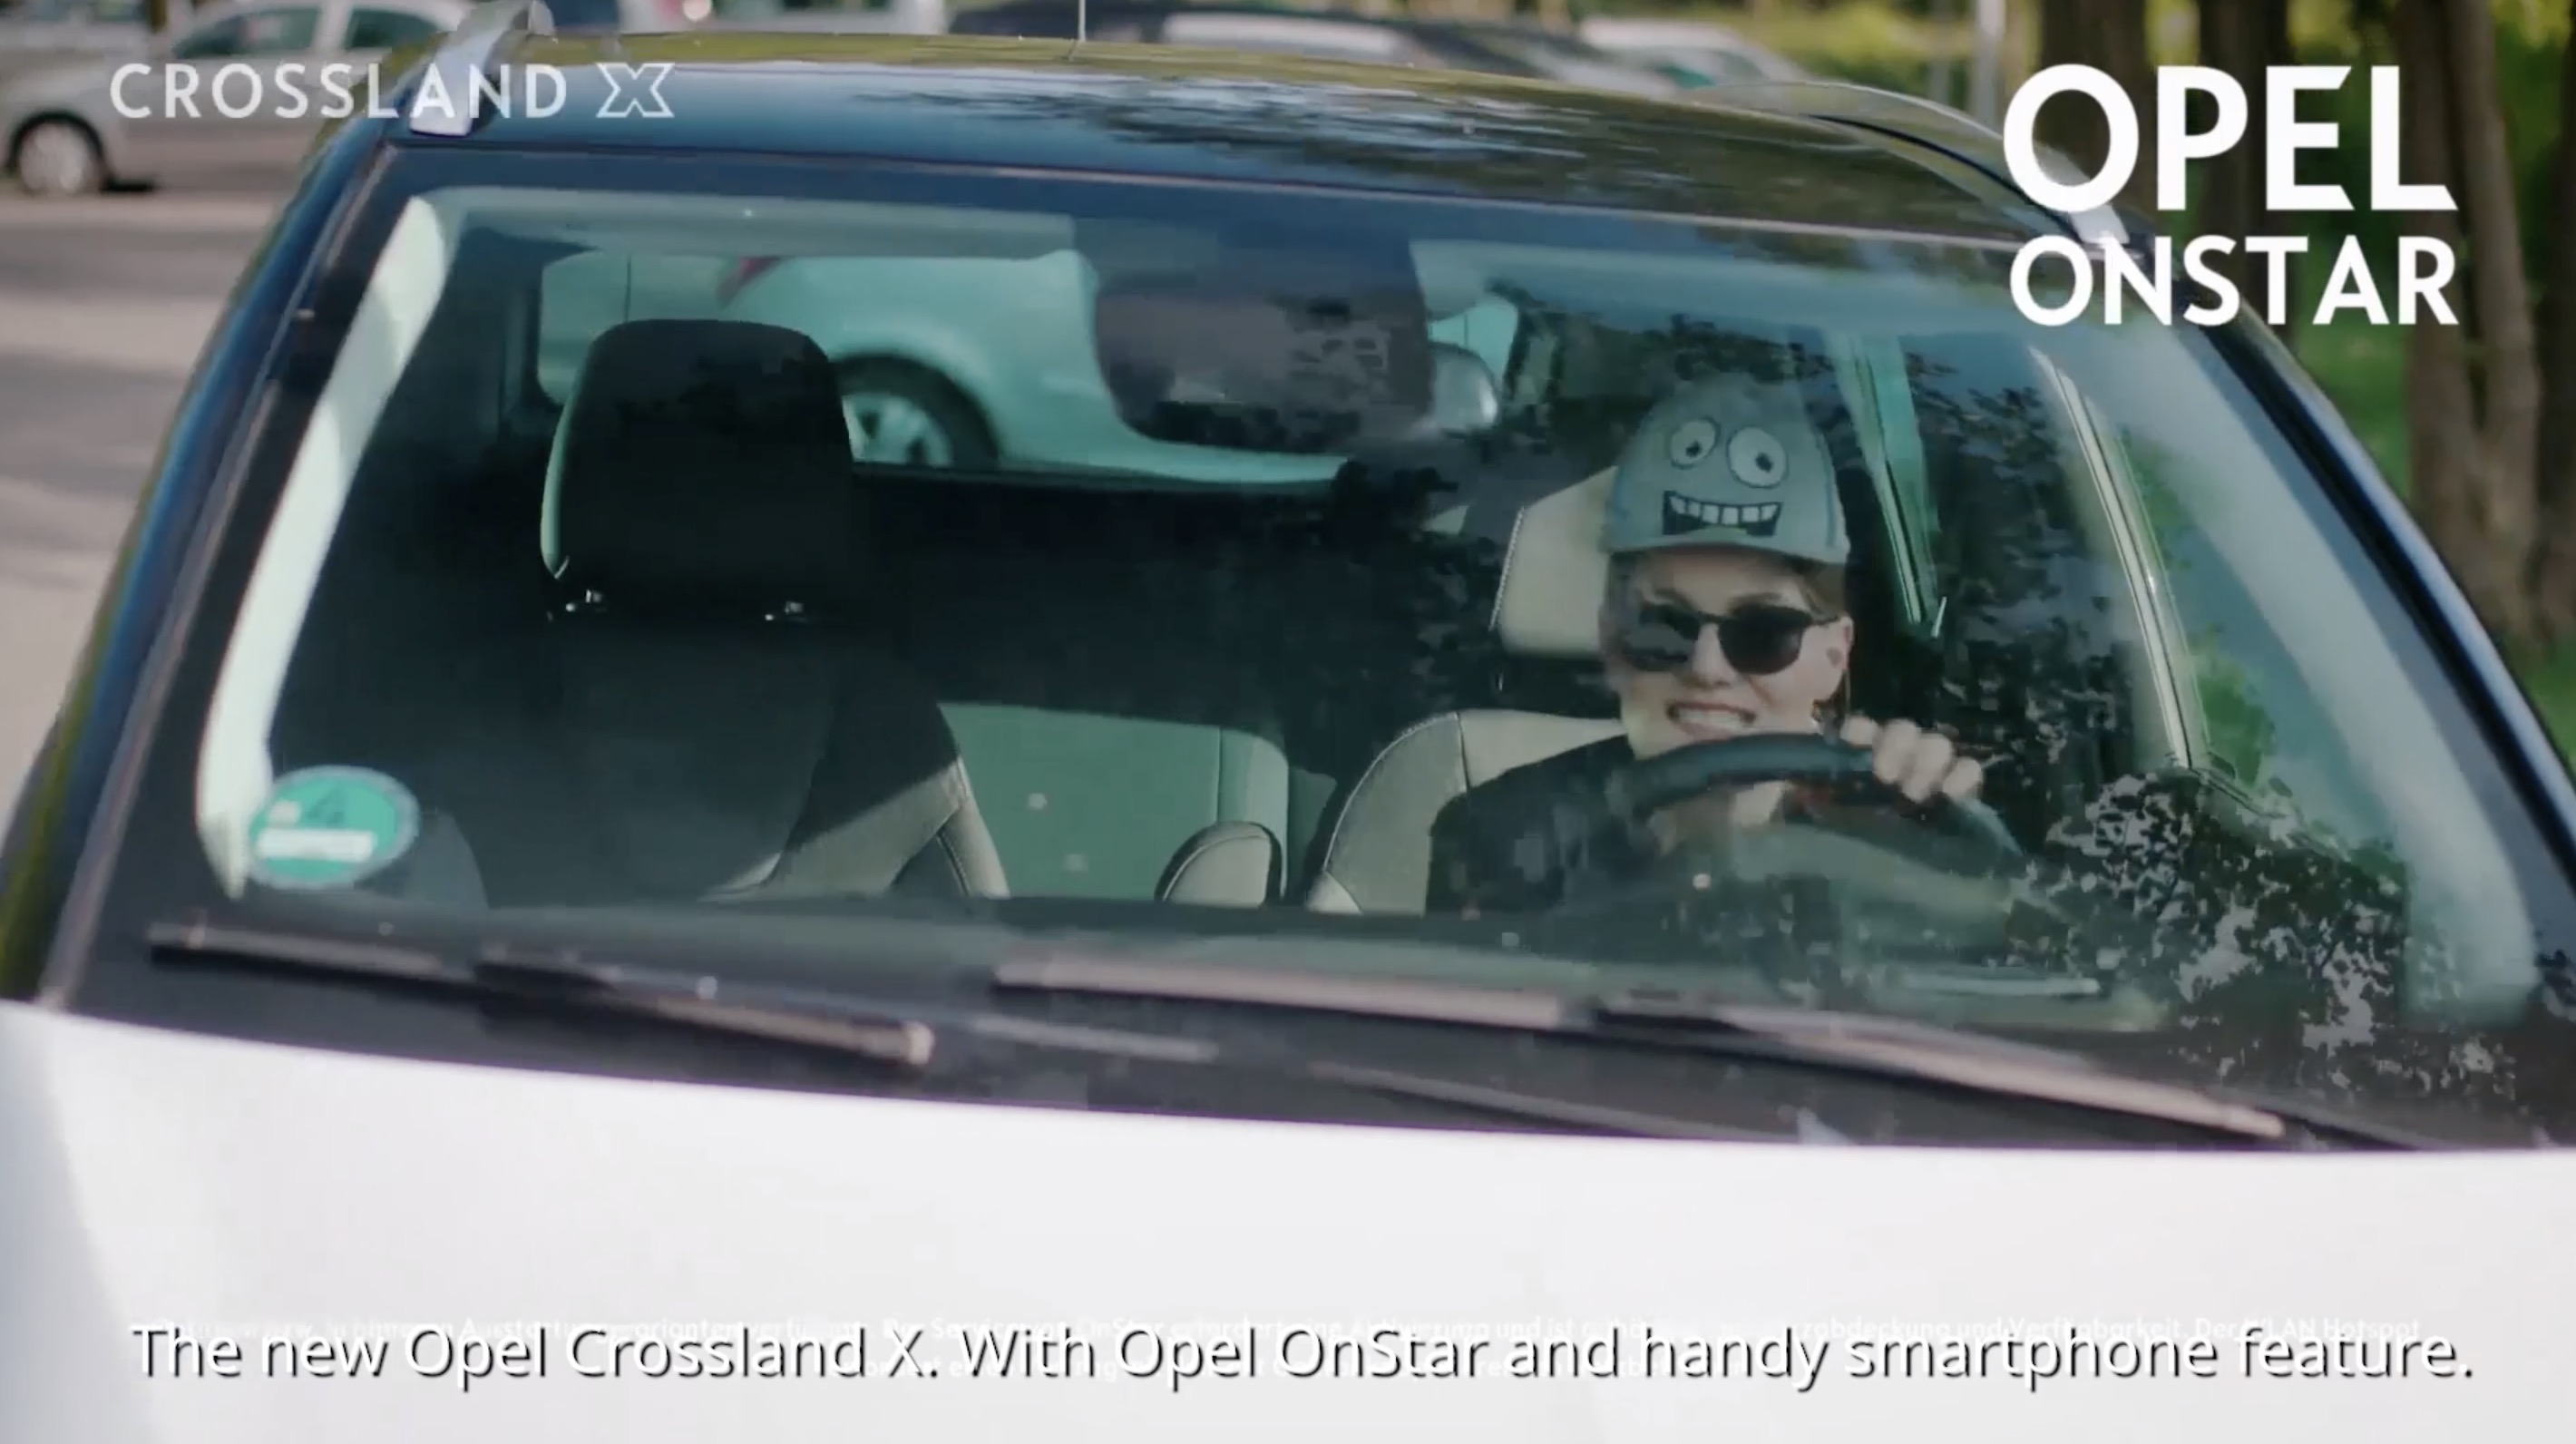 Vega Digital Awards Winner - Opel Crossland X Comedy Clips, SevenOne AdFactory GmbH